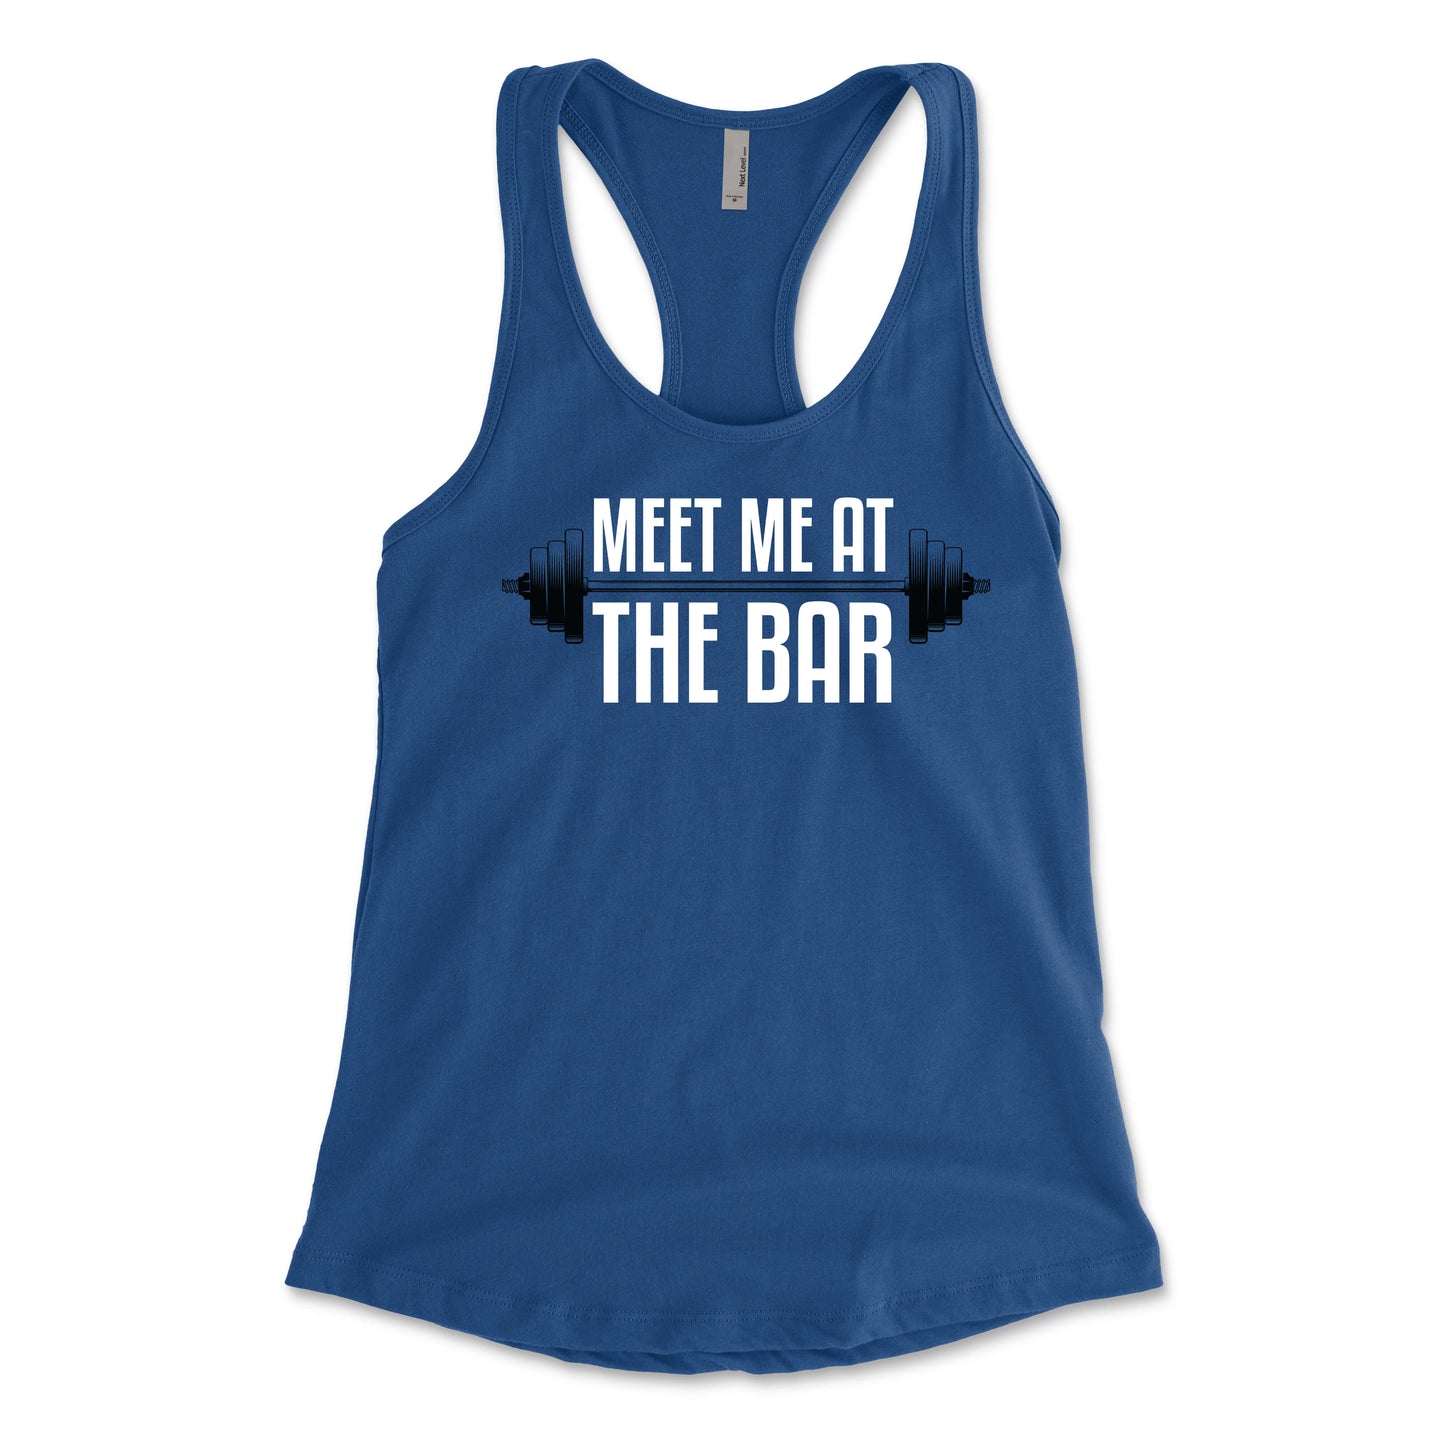 Meet Me At The Bar Women's Racerback